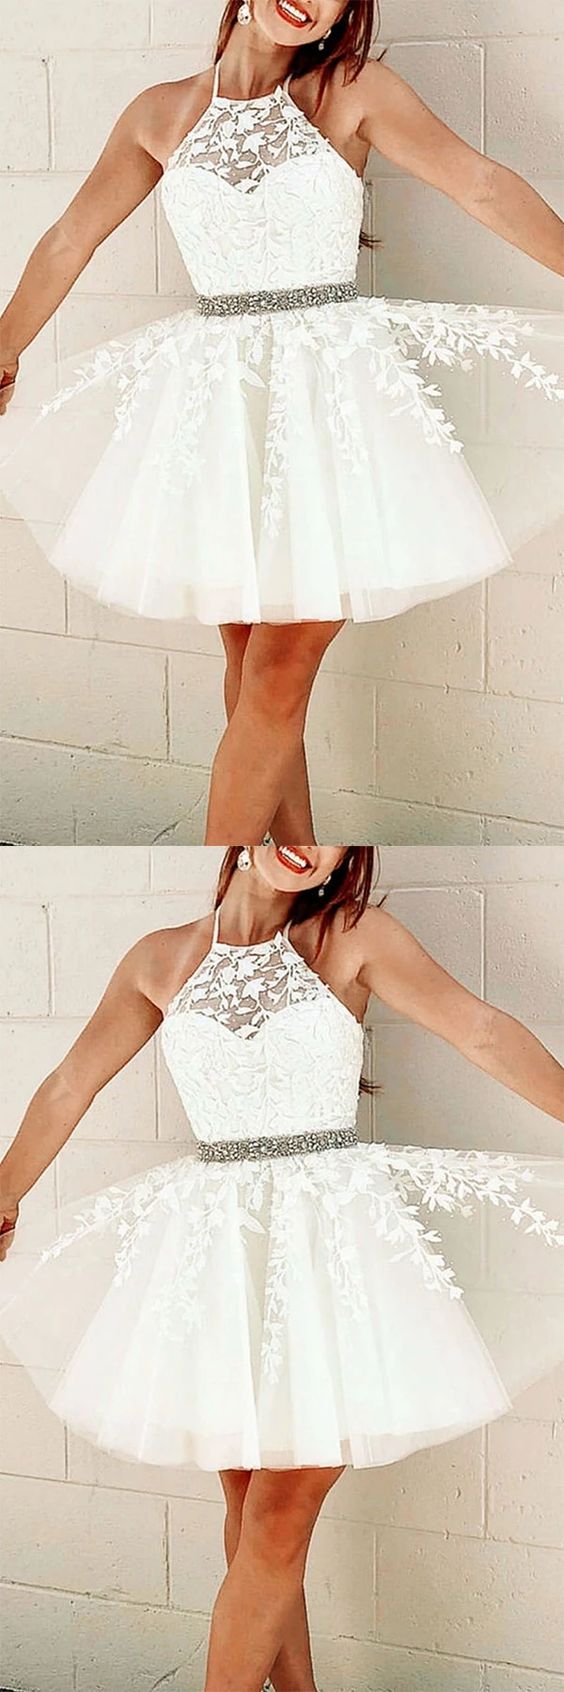 Lace Homecoming Dresses Kristina White Tulle Short Dress White HC4647